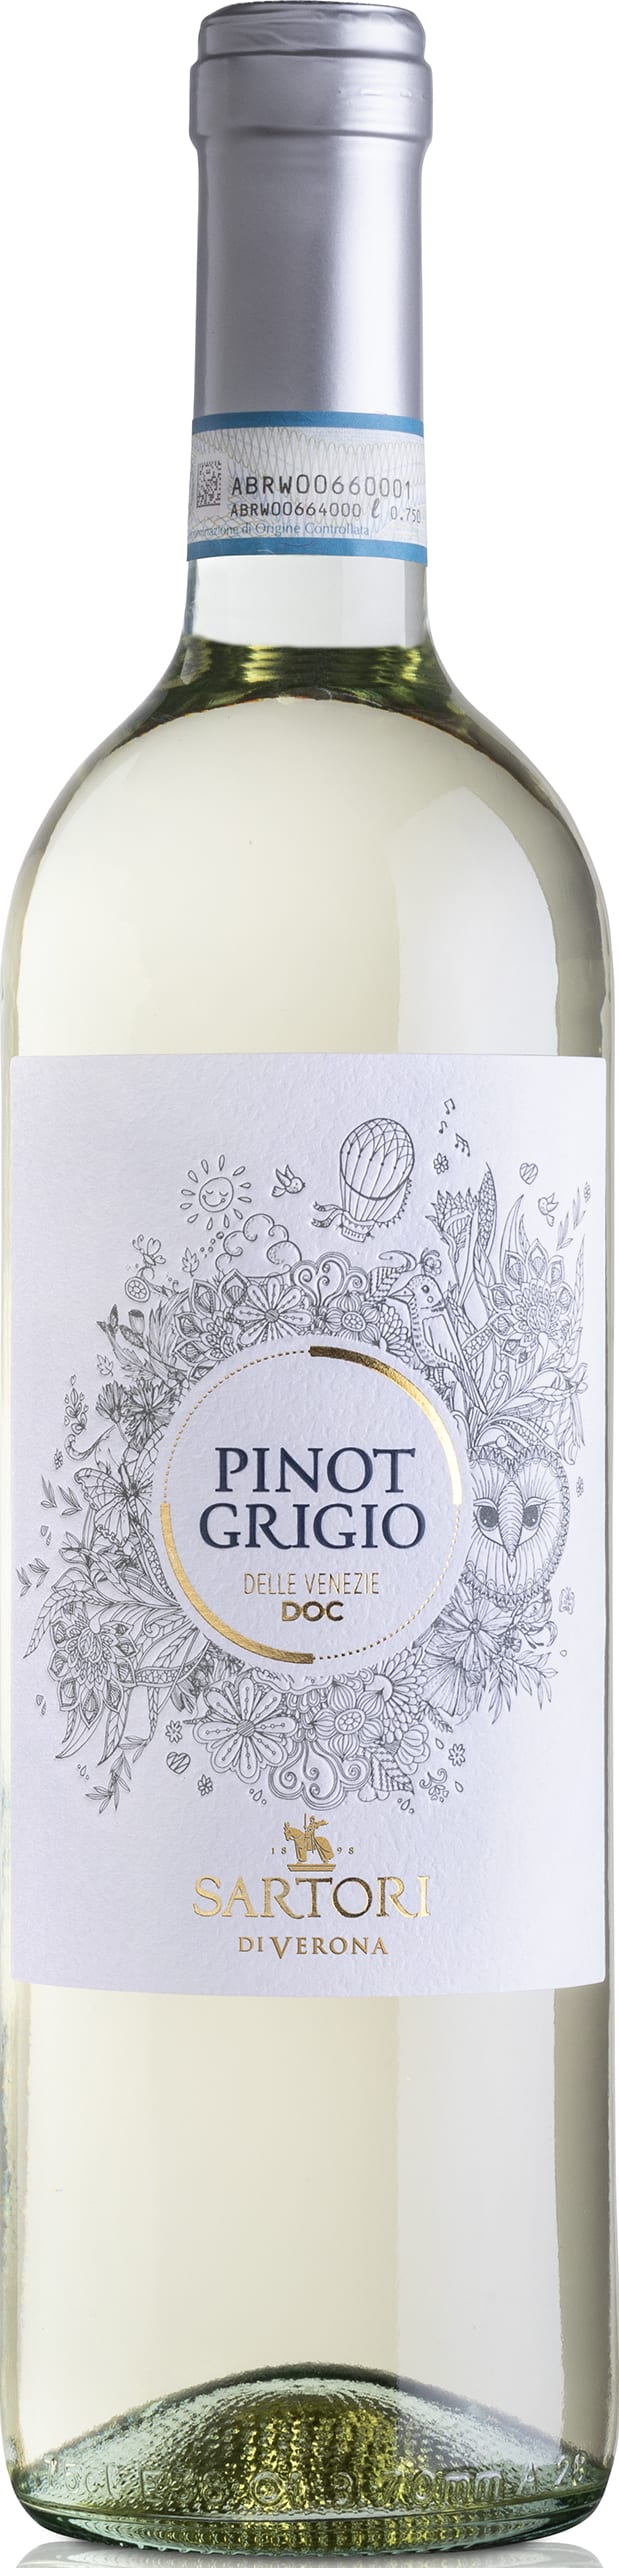 Sartori Pinot Grigio Venezie Vigna Mescita 2022 75cl - Buy Sartori Wines from GREAT WINES DIRECT wine shop